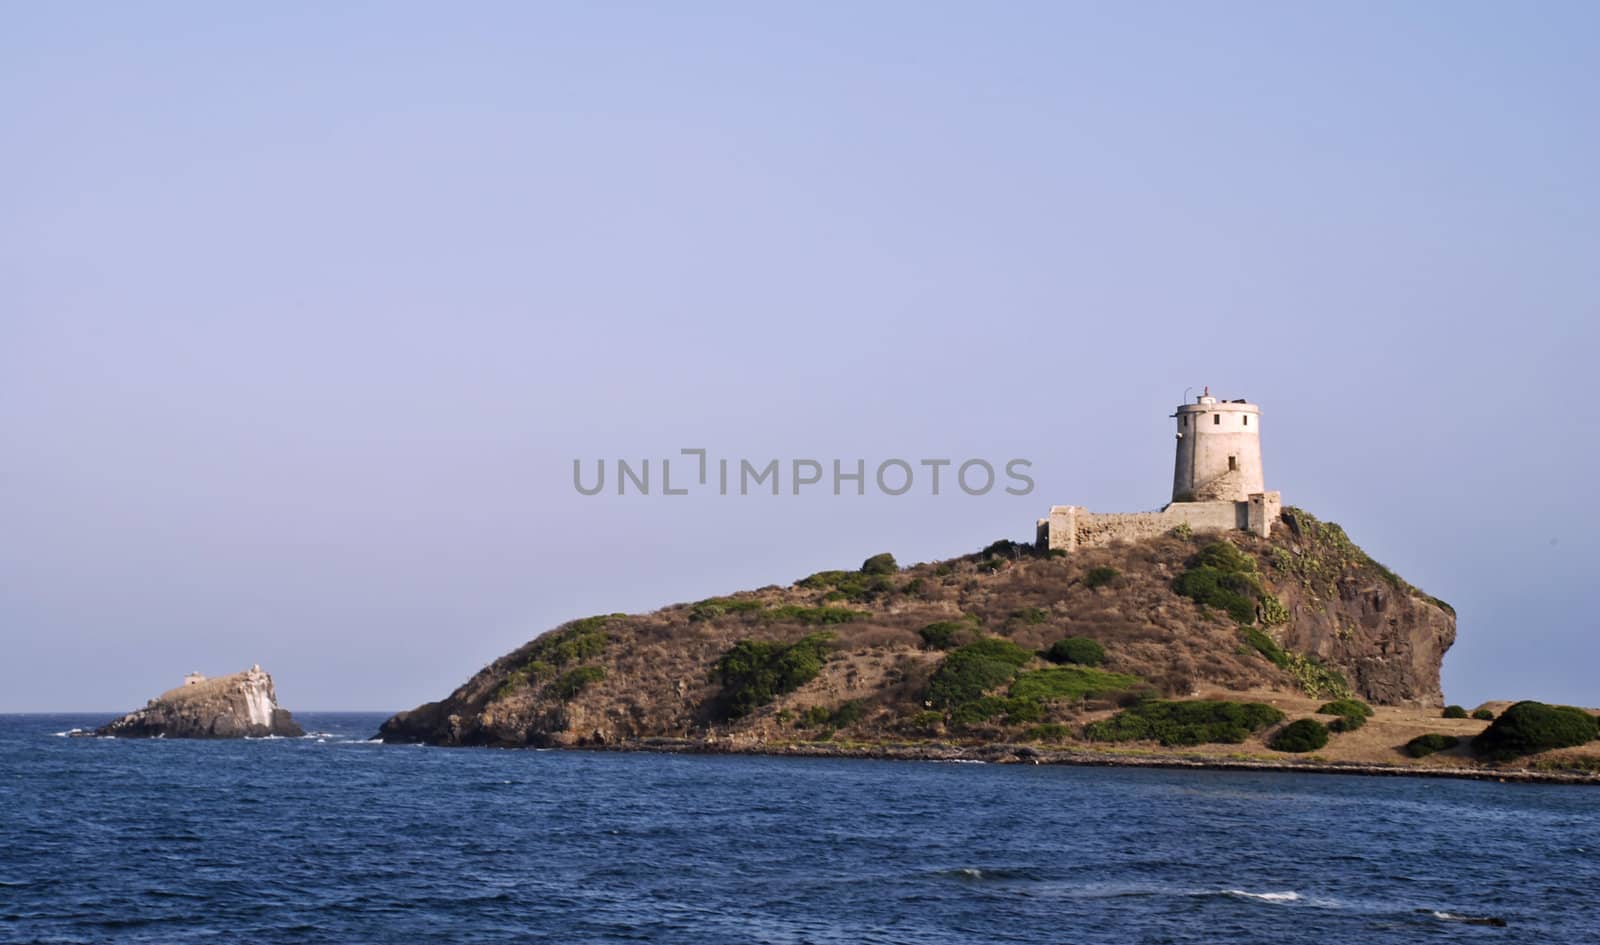 Sardinian lighthouse by fyletto